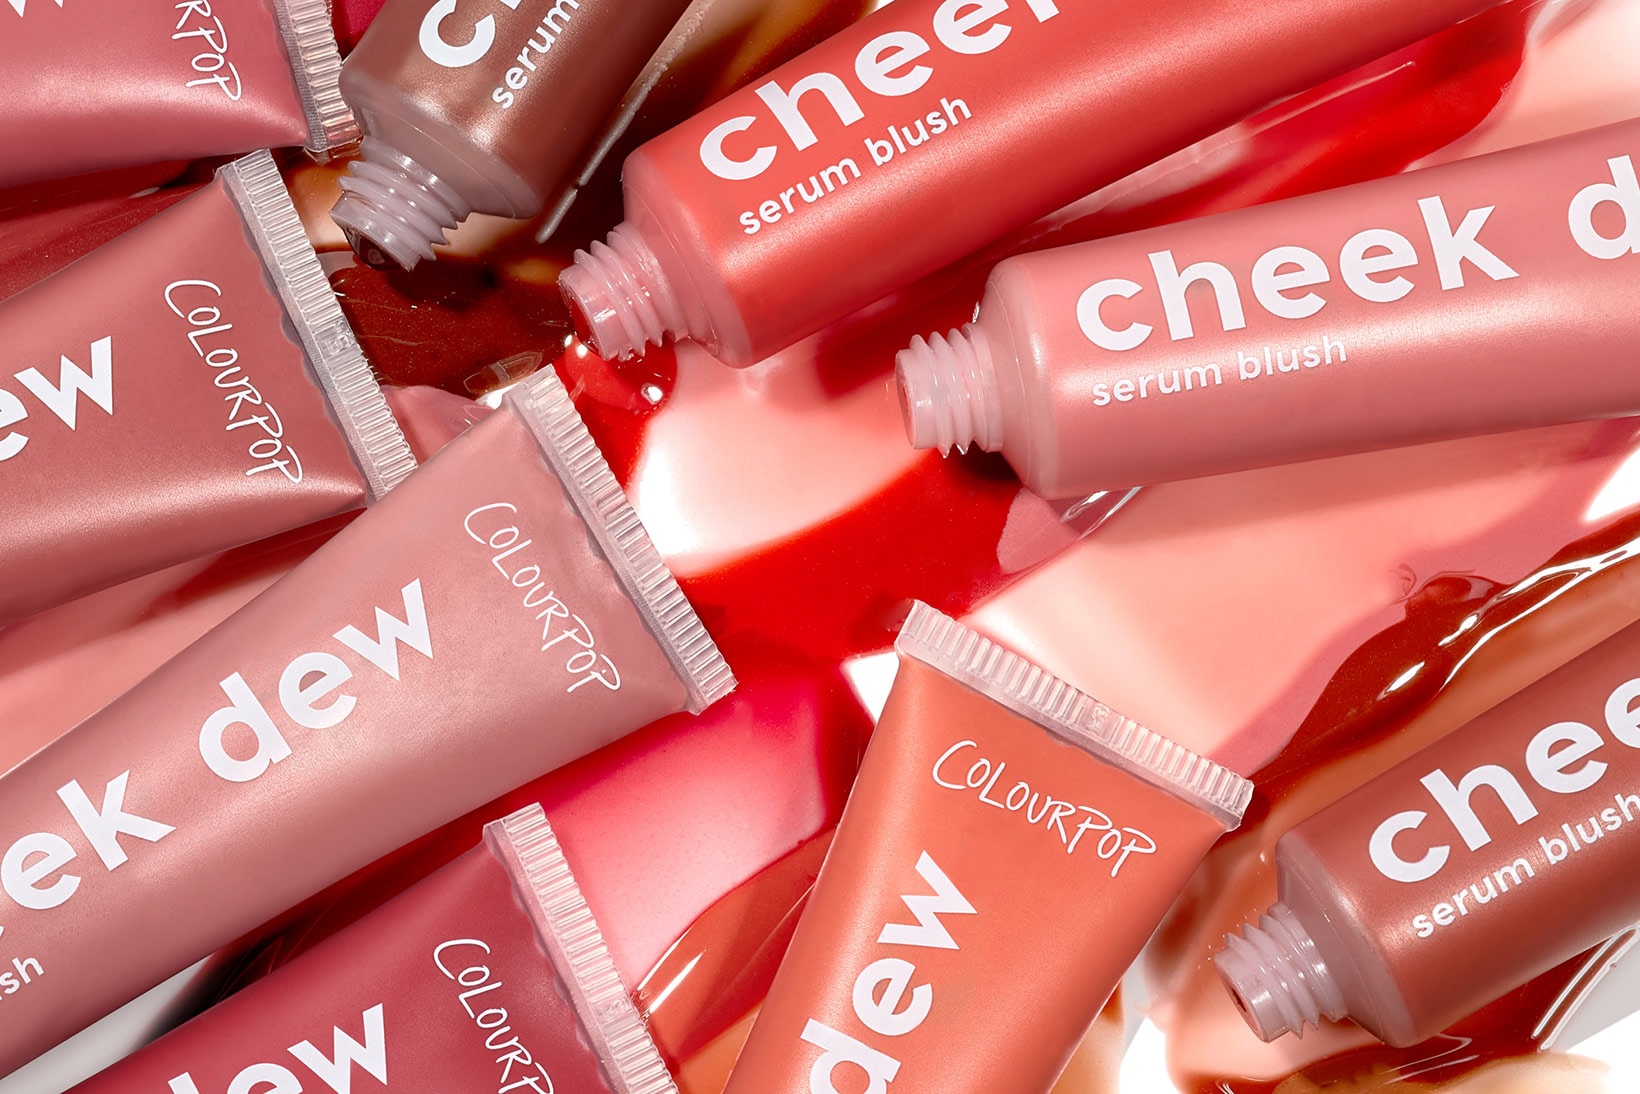 colourpop cosmetics cheek dew blush serum liquid makeup pink orange brown